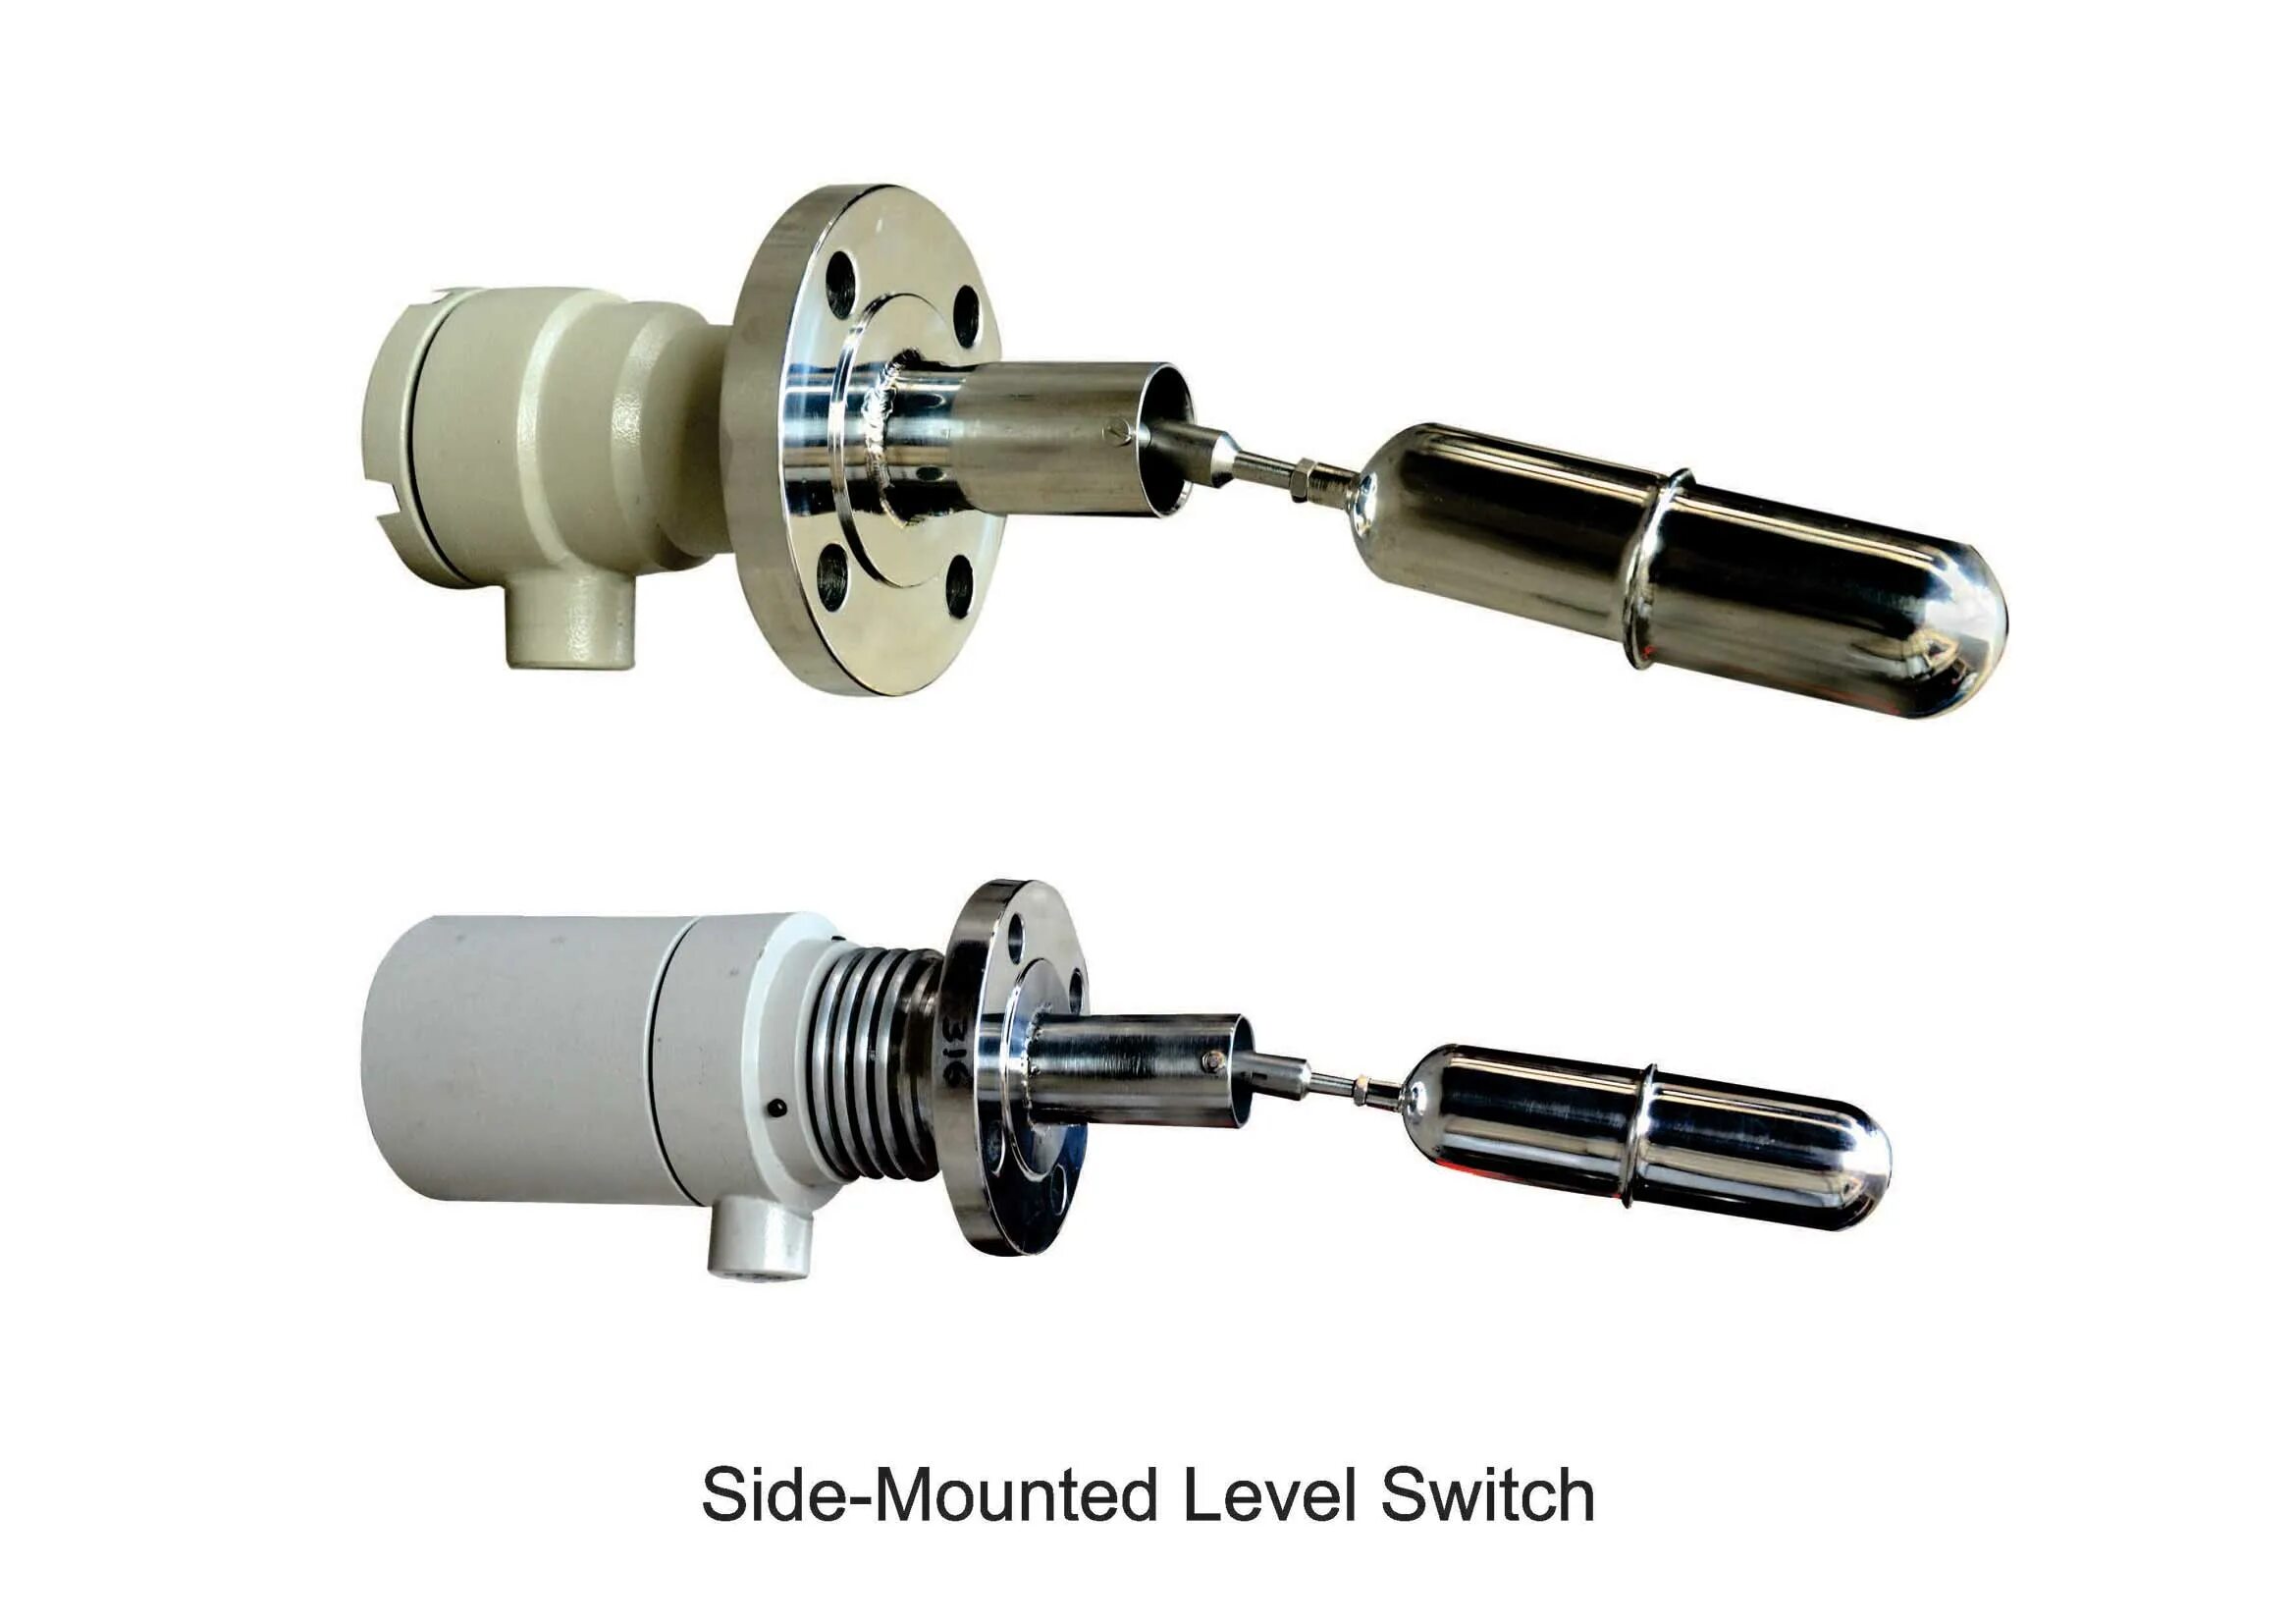 Level Switch shm-100e. Level Switch lst6140. Mobrey Level Switch. Level Switch Tester mmk110. Level switch